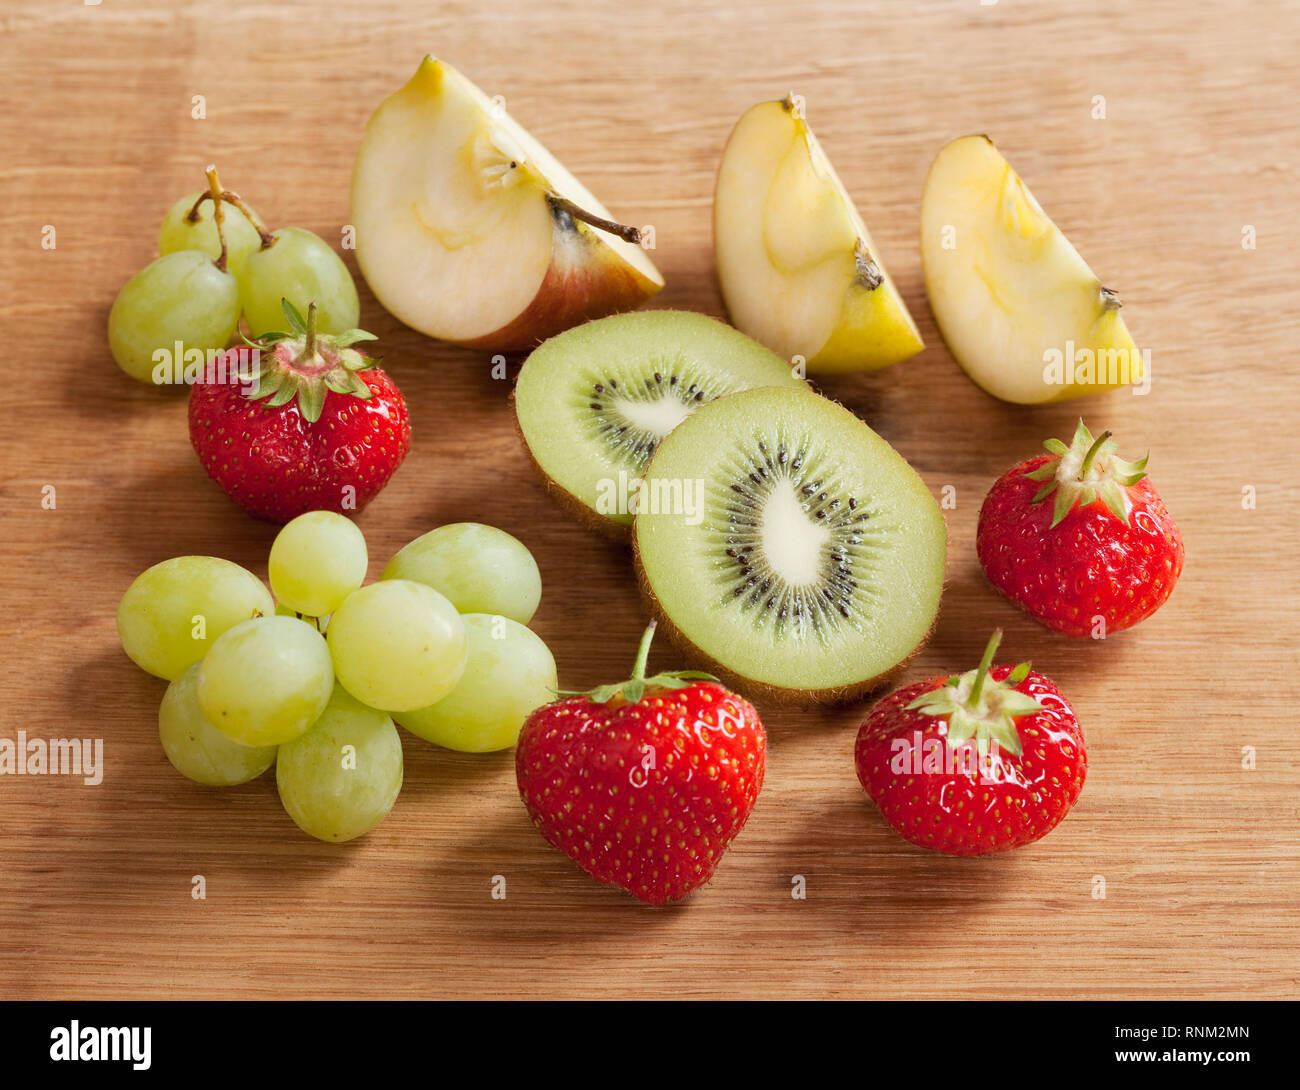 Obst: Apfel, grüne Trauben, Kiwi und Erdbeeren. Stuido Bild. Gremany. Stockfoto